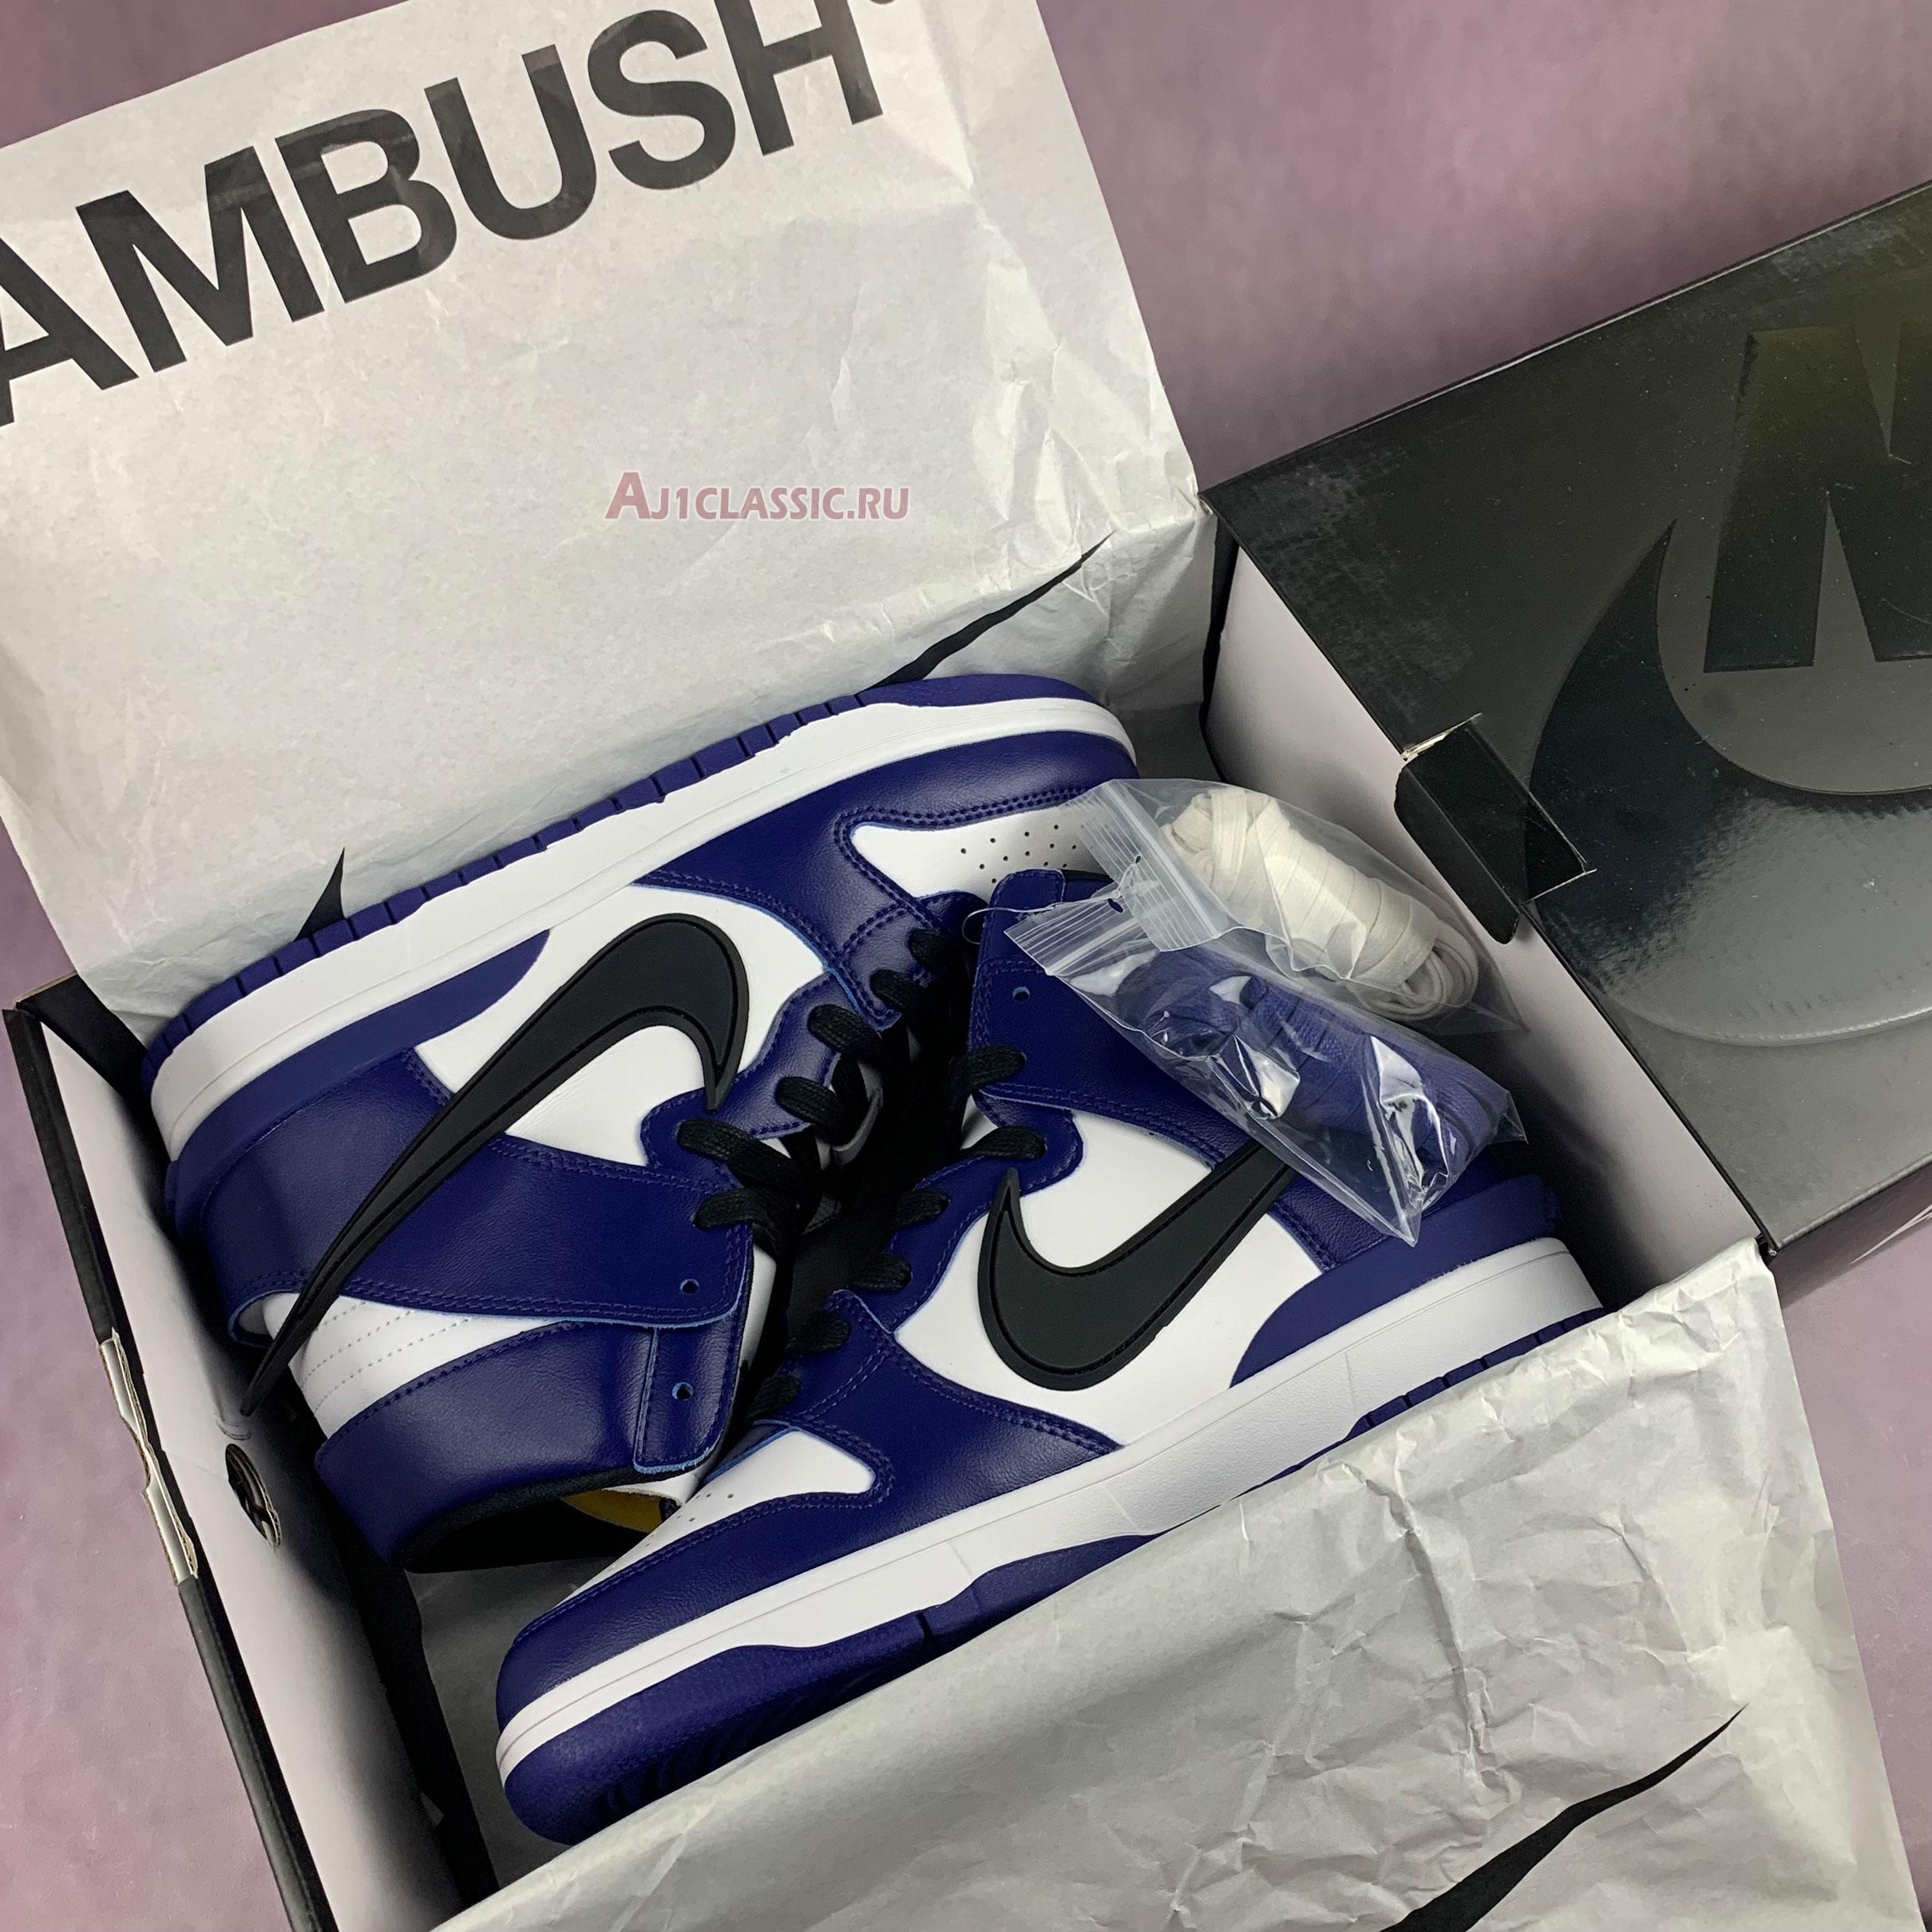 AMBUSH x Nike Dunk High Deep Royal CU7544-400 Deep Royal Blue/White/Pale Ivory/Black Sneakers